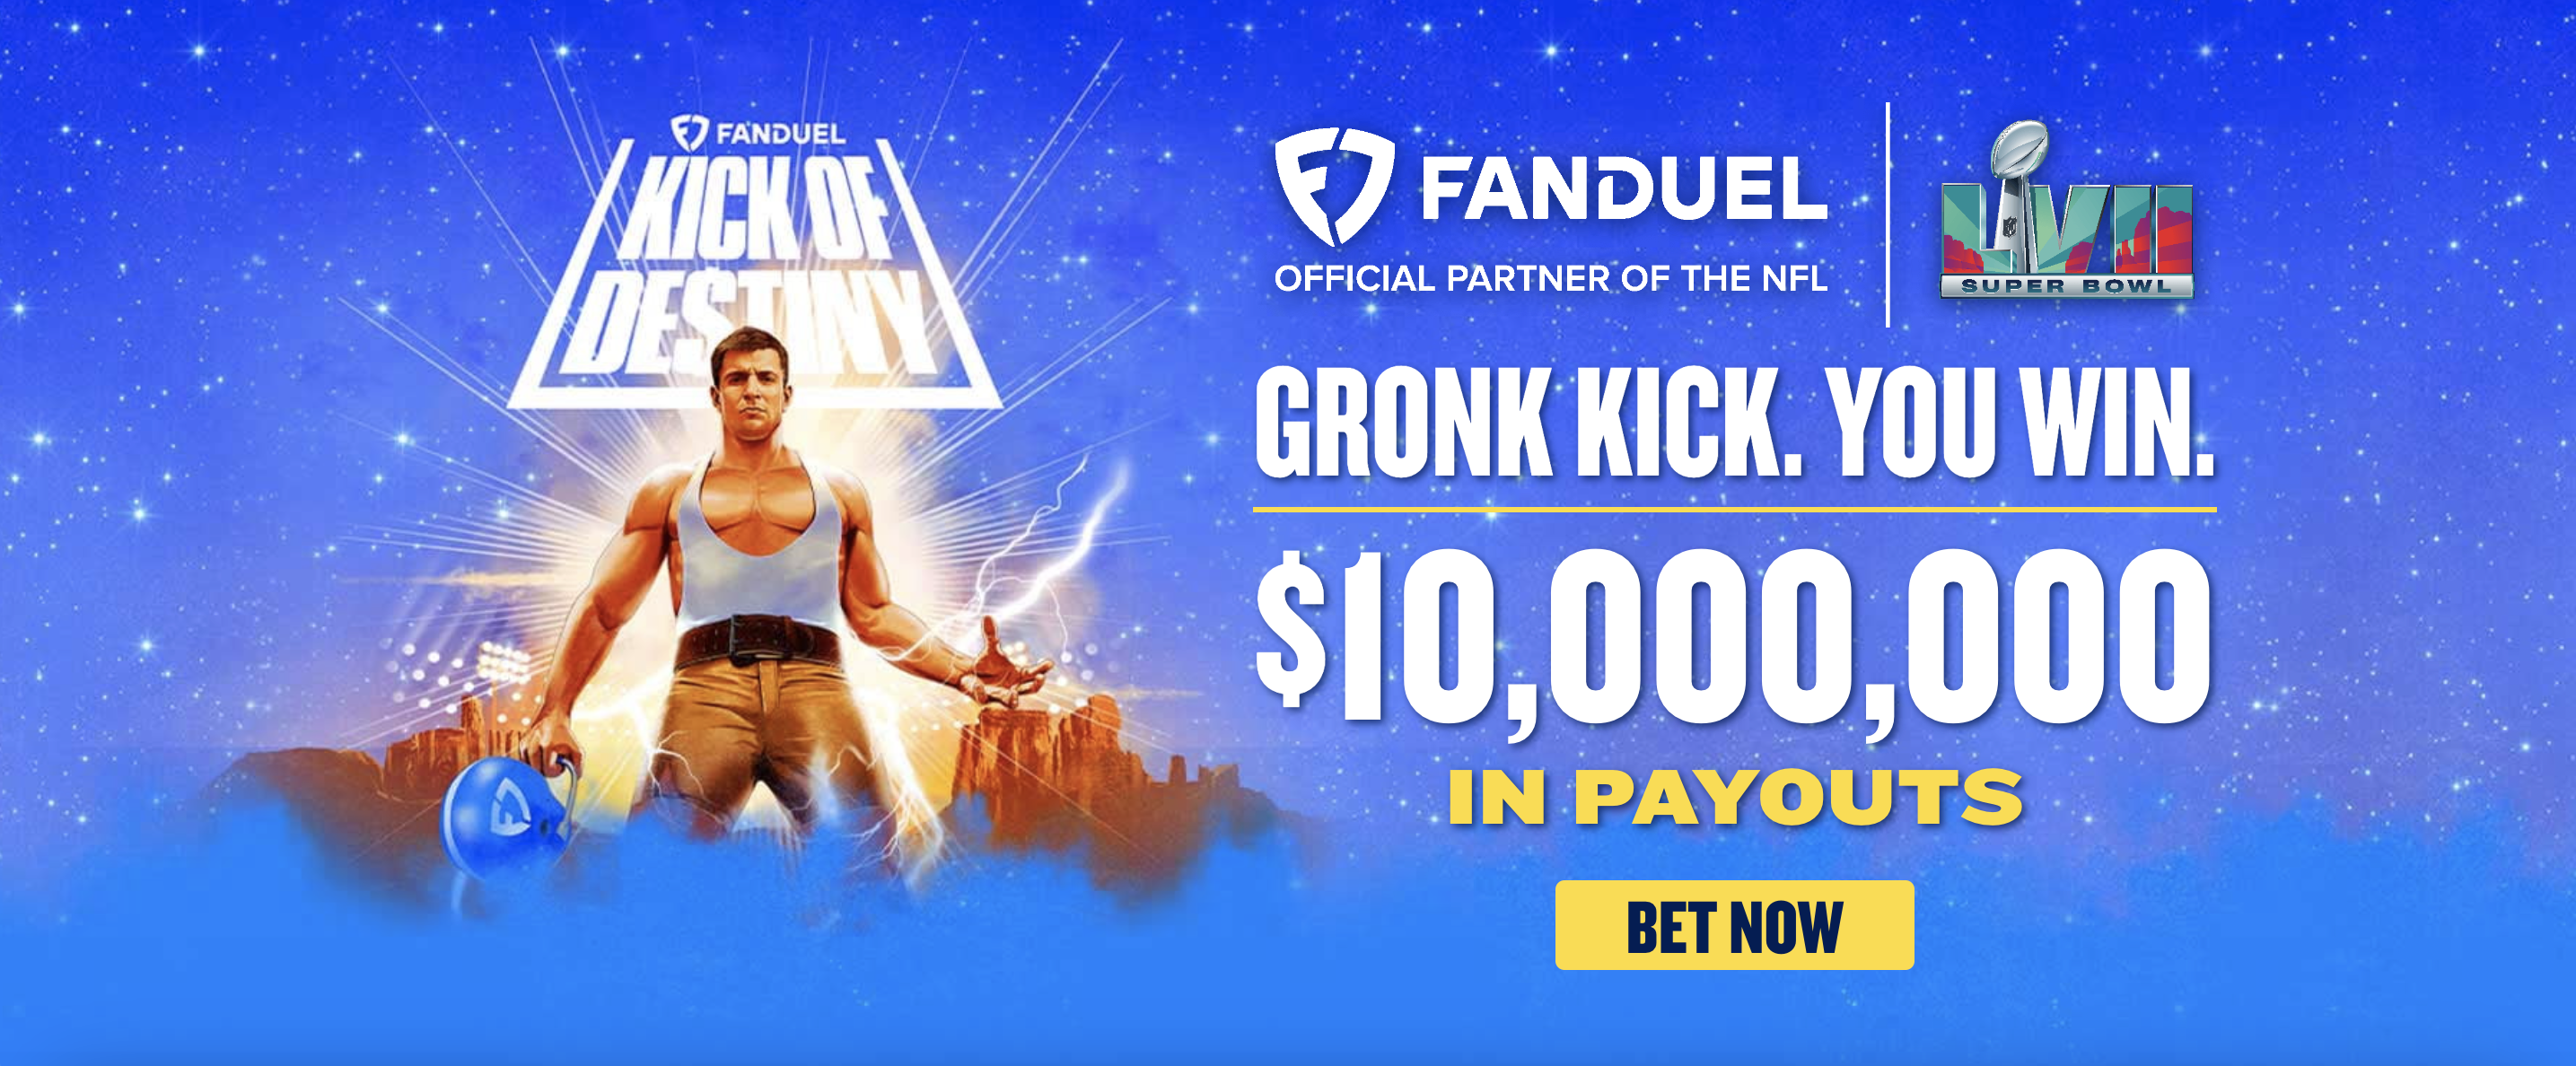 Field Goal Kick of Destiny: Rob Gronkowski Super Bowl Kick to Win